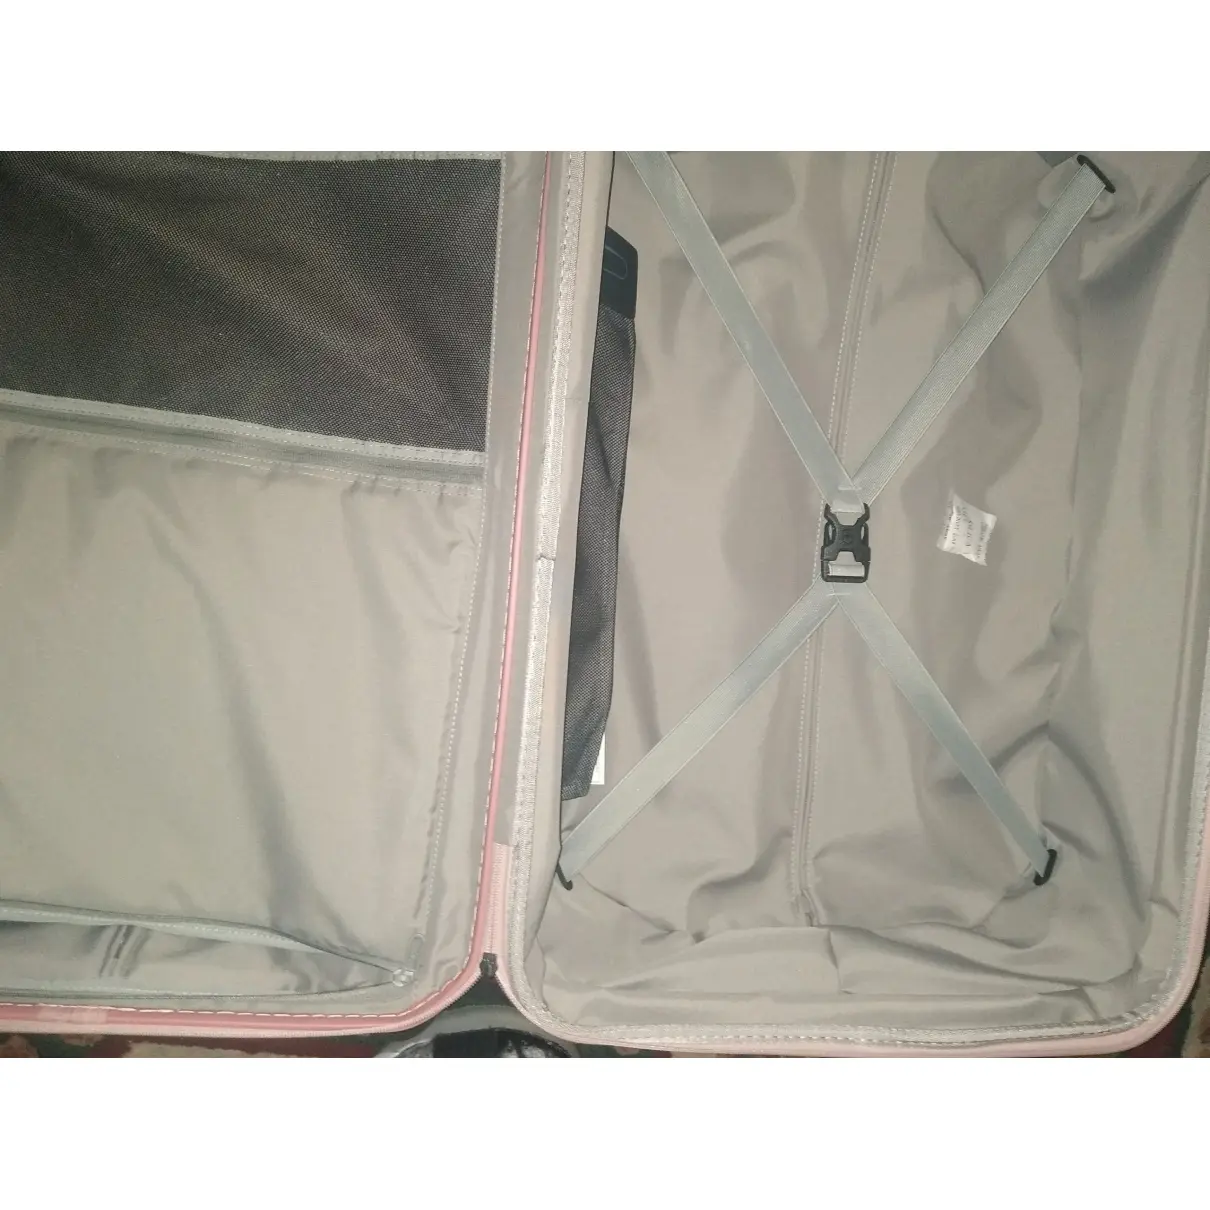 Buy Victorinox Travel bag online